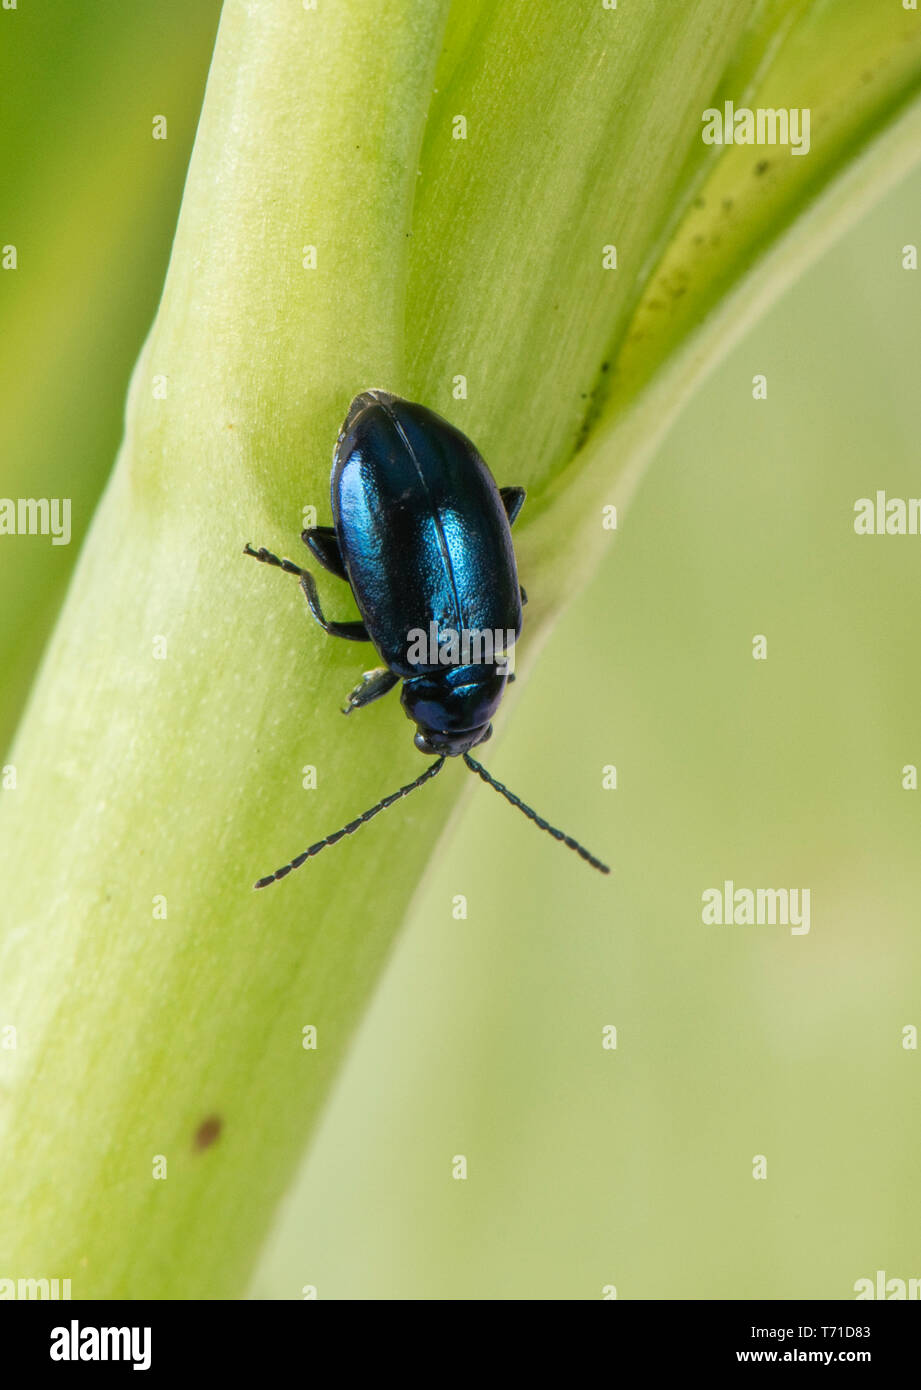 Metallic green flea beetle (Altica sp.) adult gregarious polyphagous jumping insect pests, Berkshire, April Stock Photo